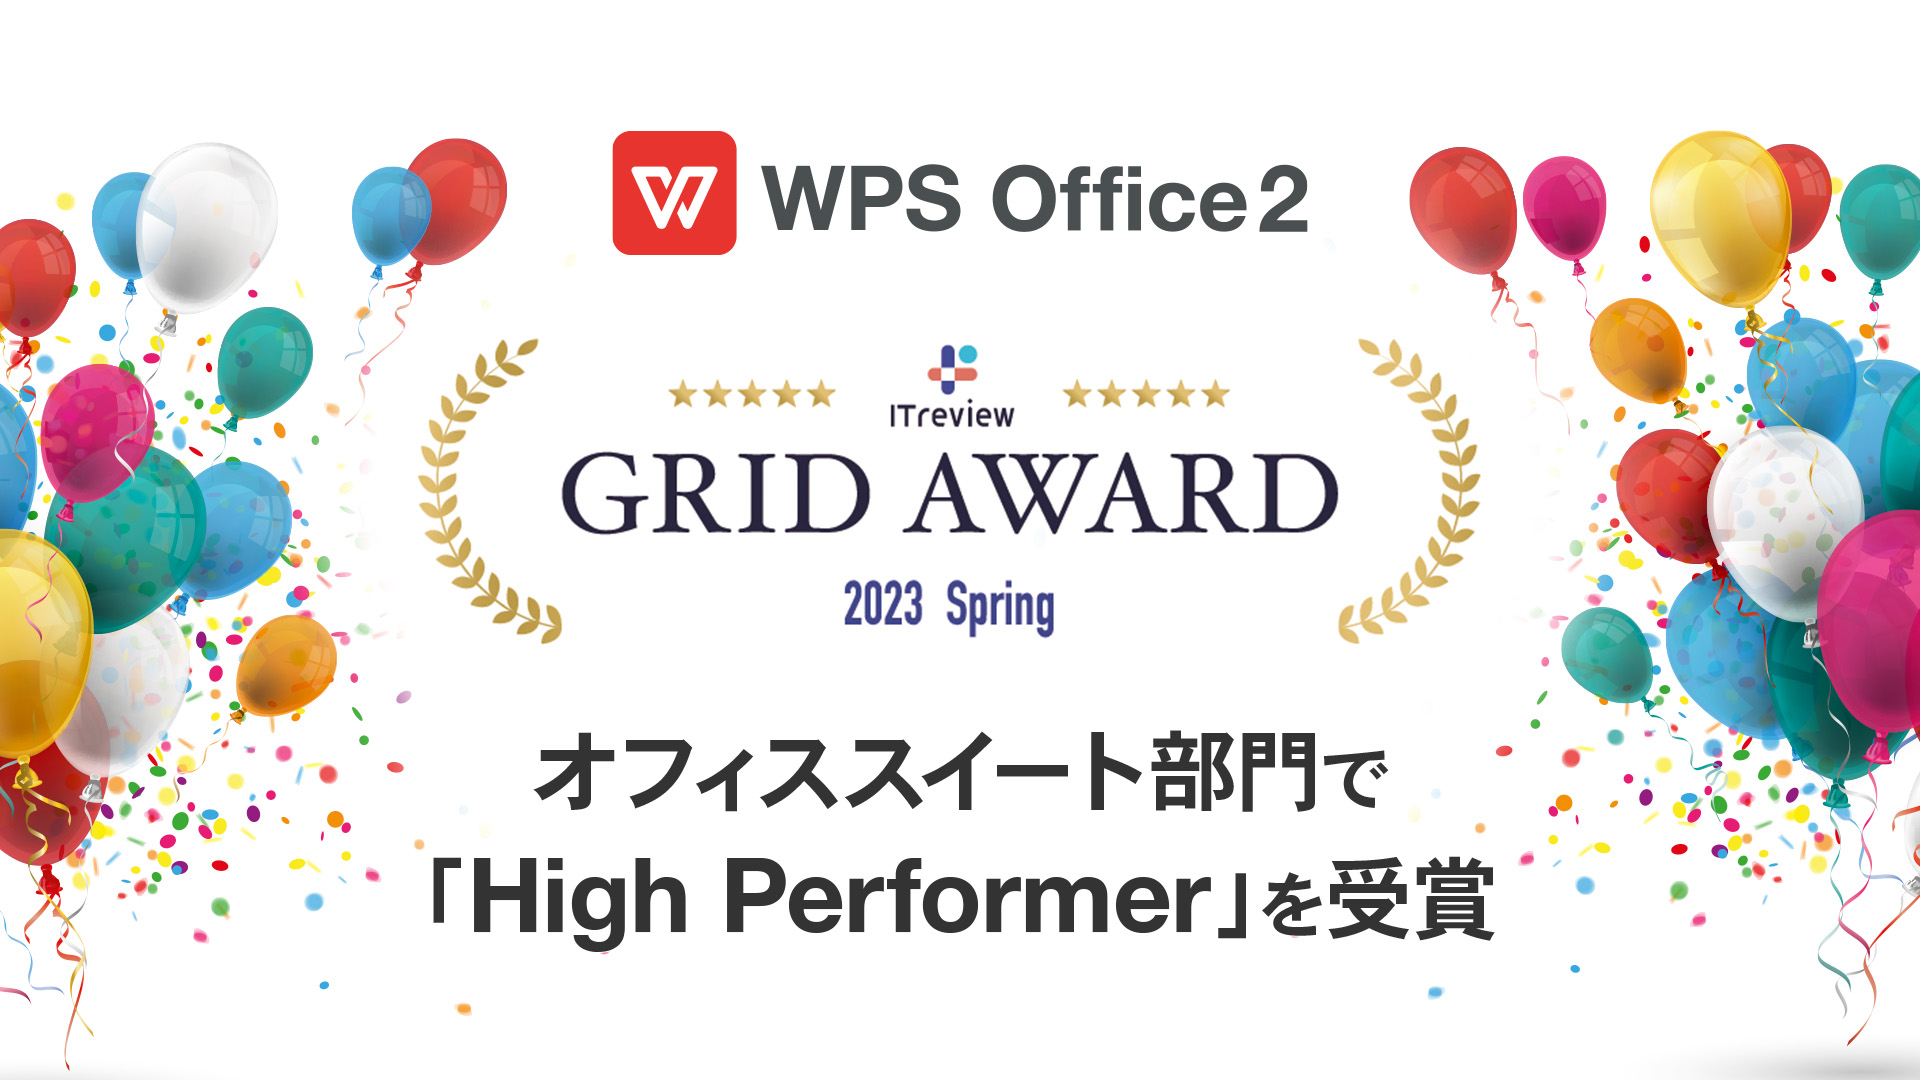 「ITreview Grid Award 2023 Spring」のオフィススイート部門で「High Performer」を受賞